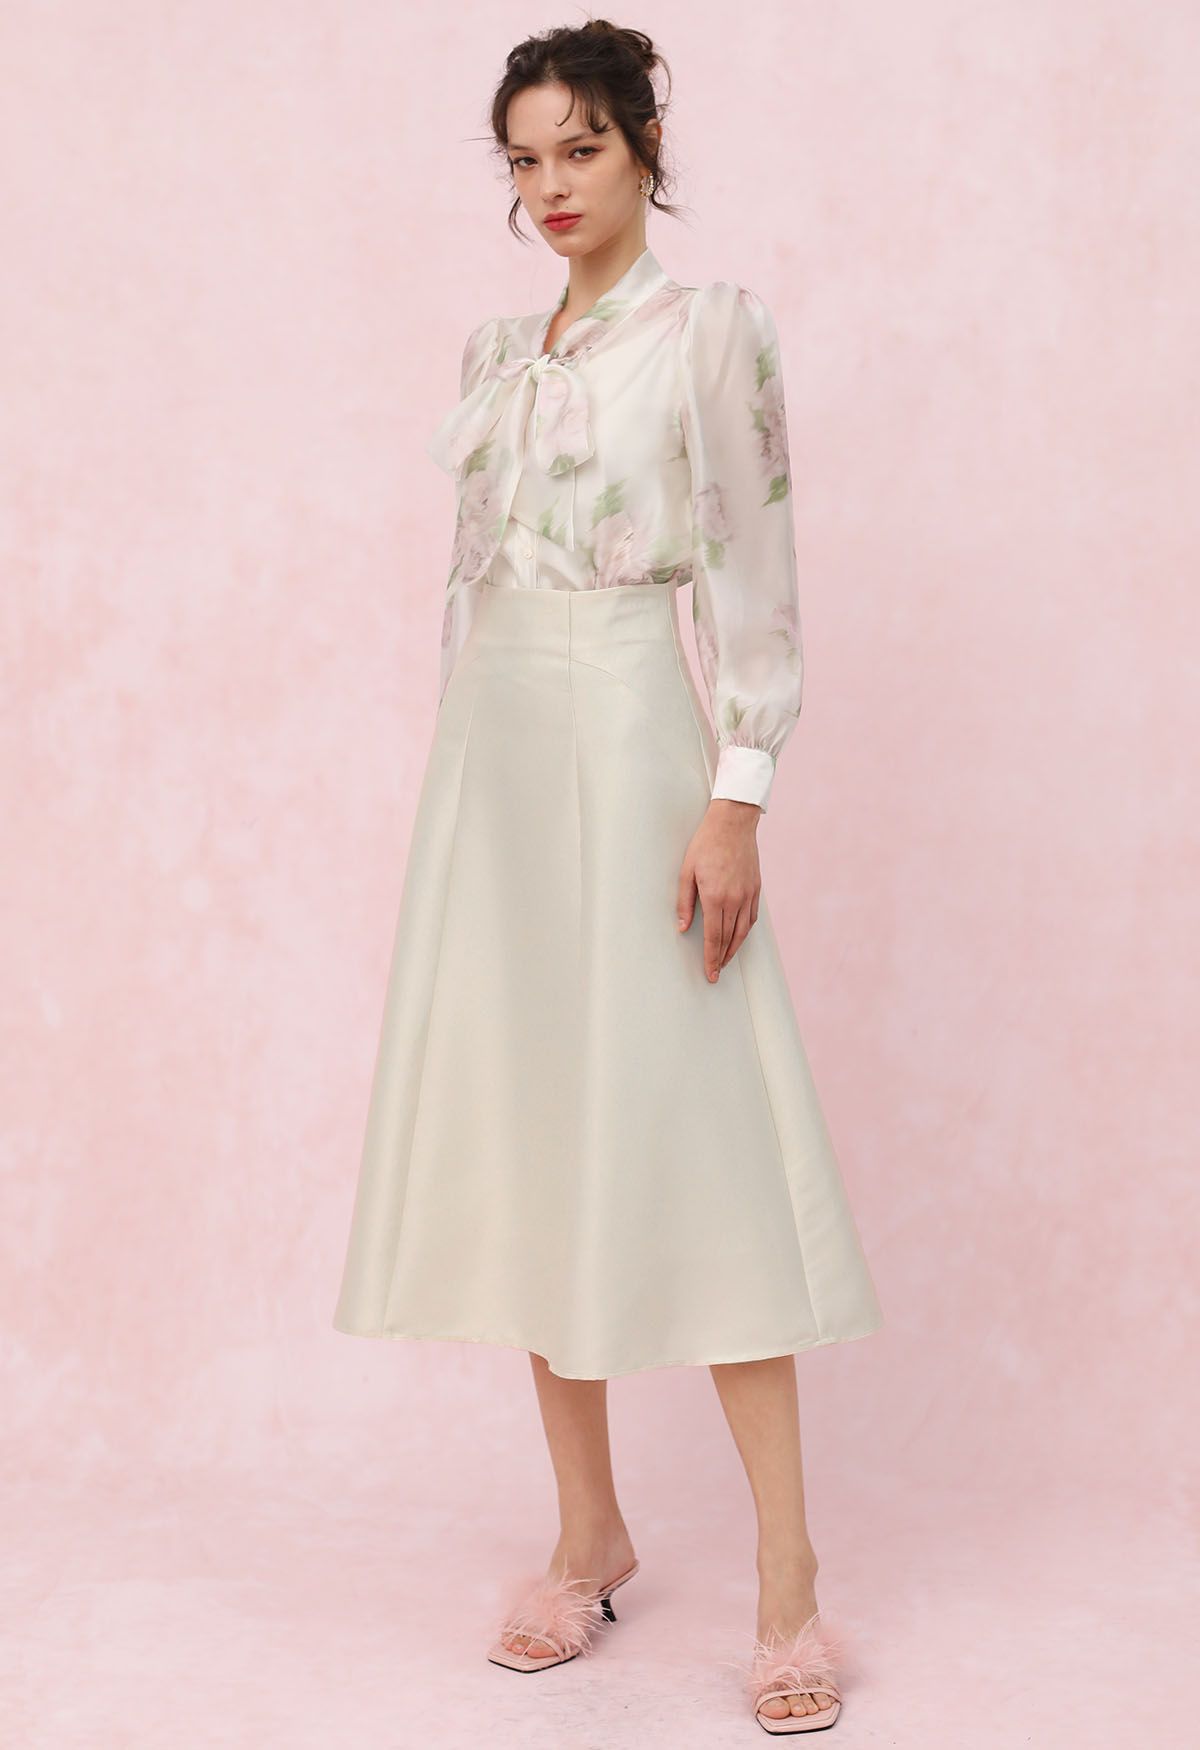 Glossy A-Line Midi Skirt in Cream